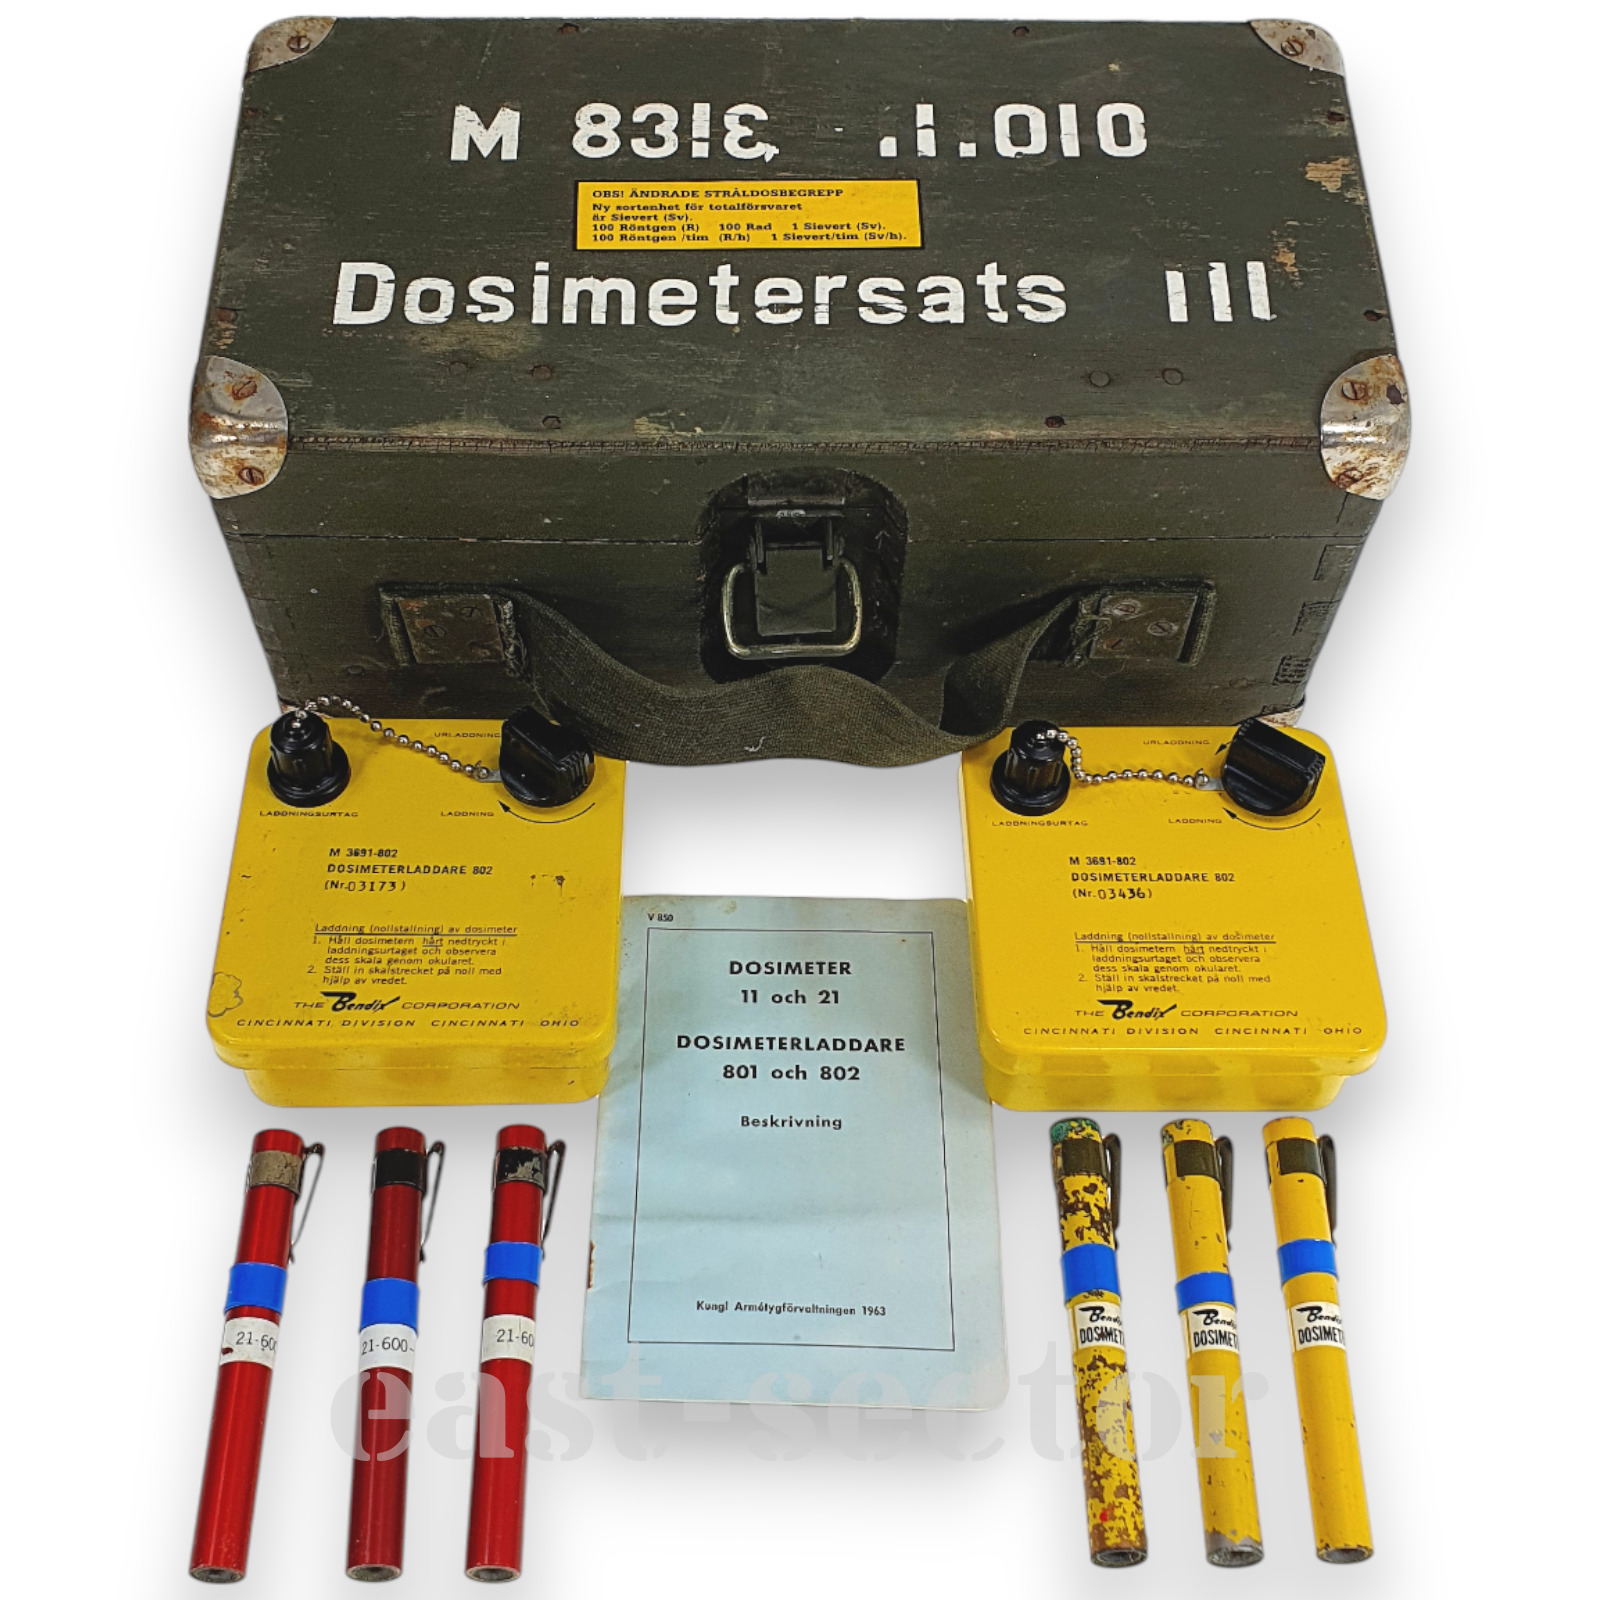 BENDIX USA Dosimeter Set Counter Radiation Detector Geiger Meter Swedish Army